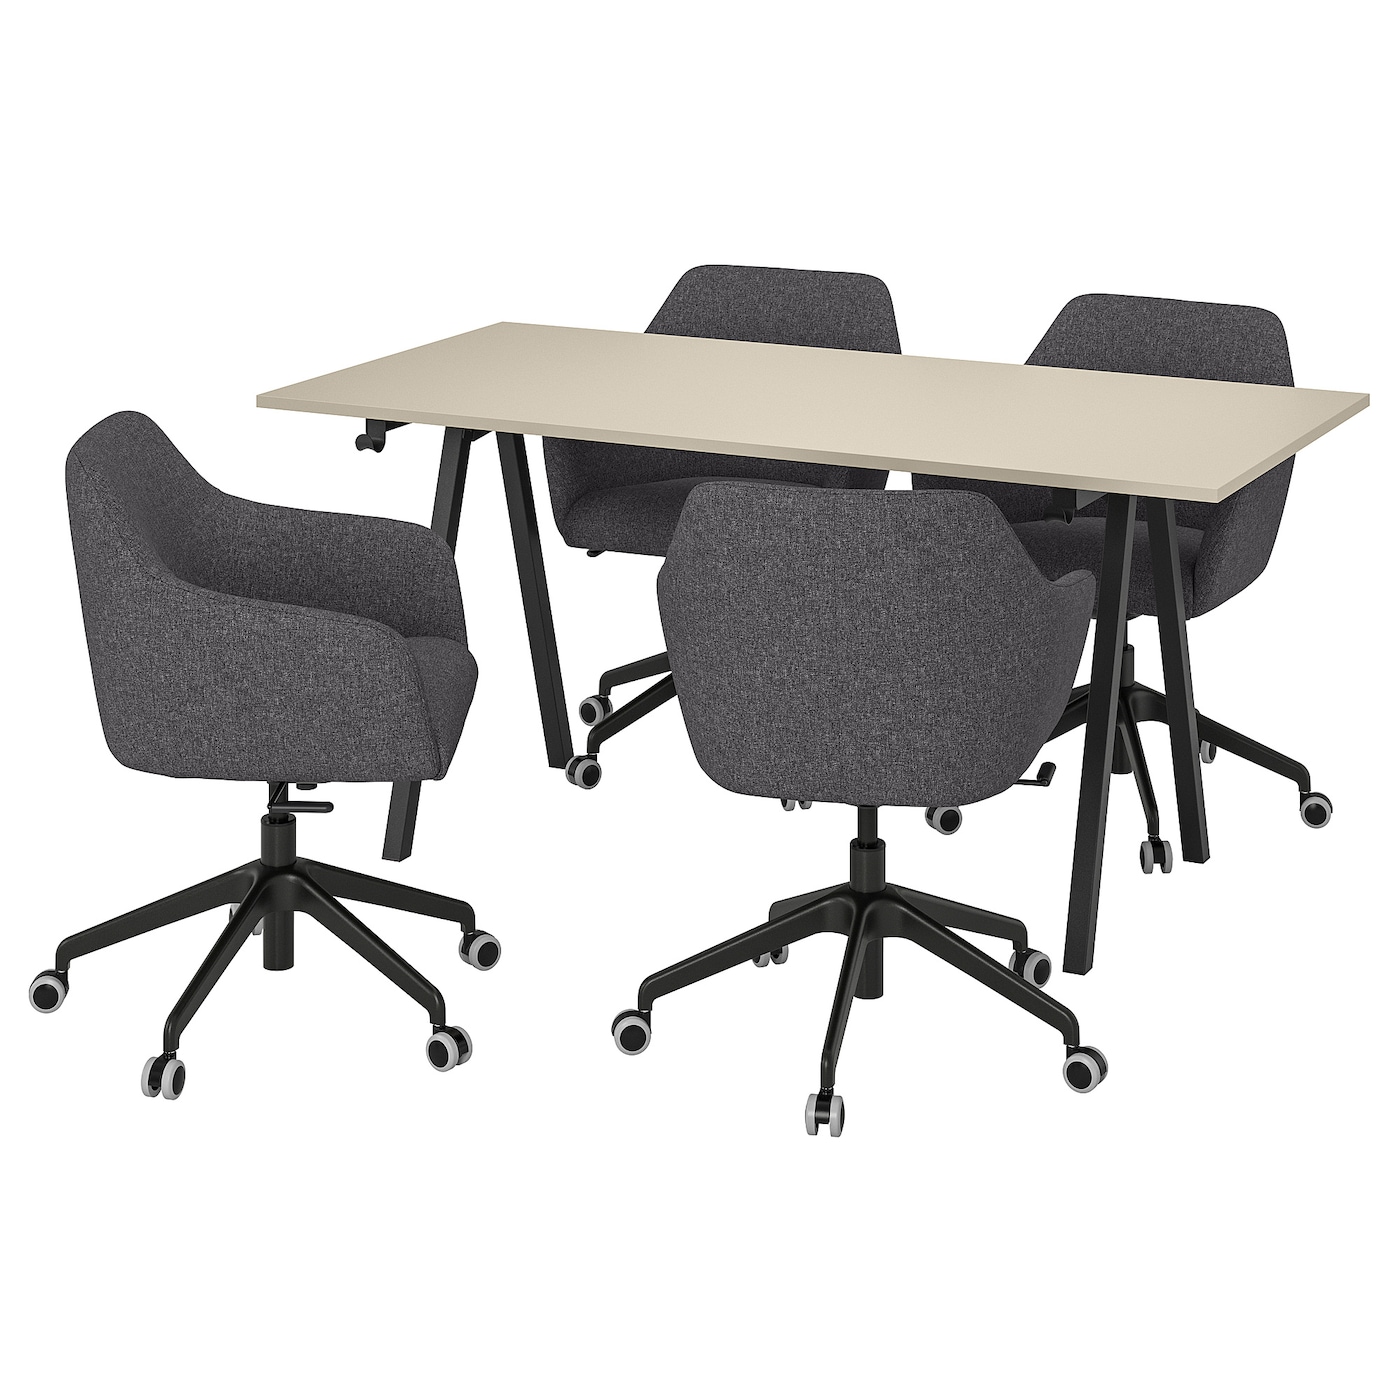 Комбинация: стол, 4 кресла - IKEA TROTTEN/TOSSBERG, 160х80 см, антрацит/темно-серый/бежевый, ТРОТТЕН/ТОССБЕРГ ИКЕА